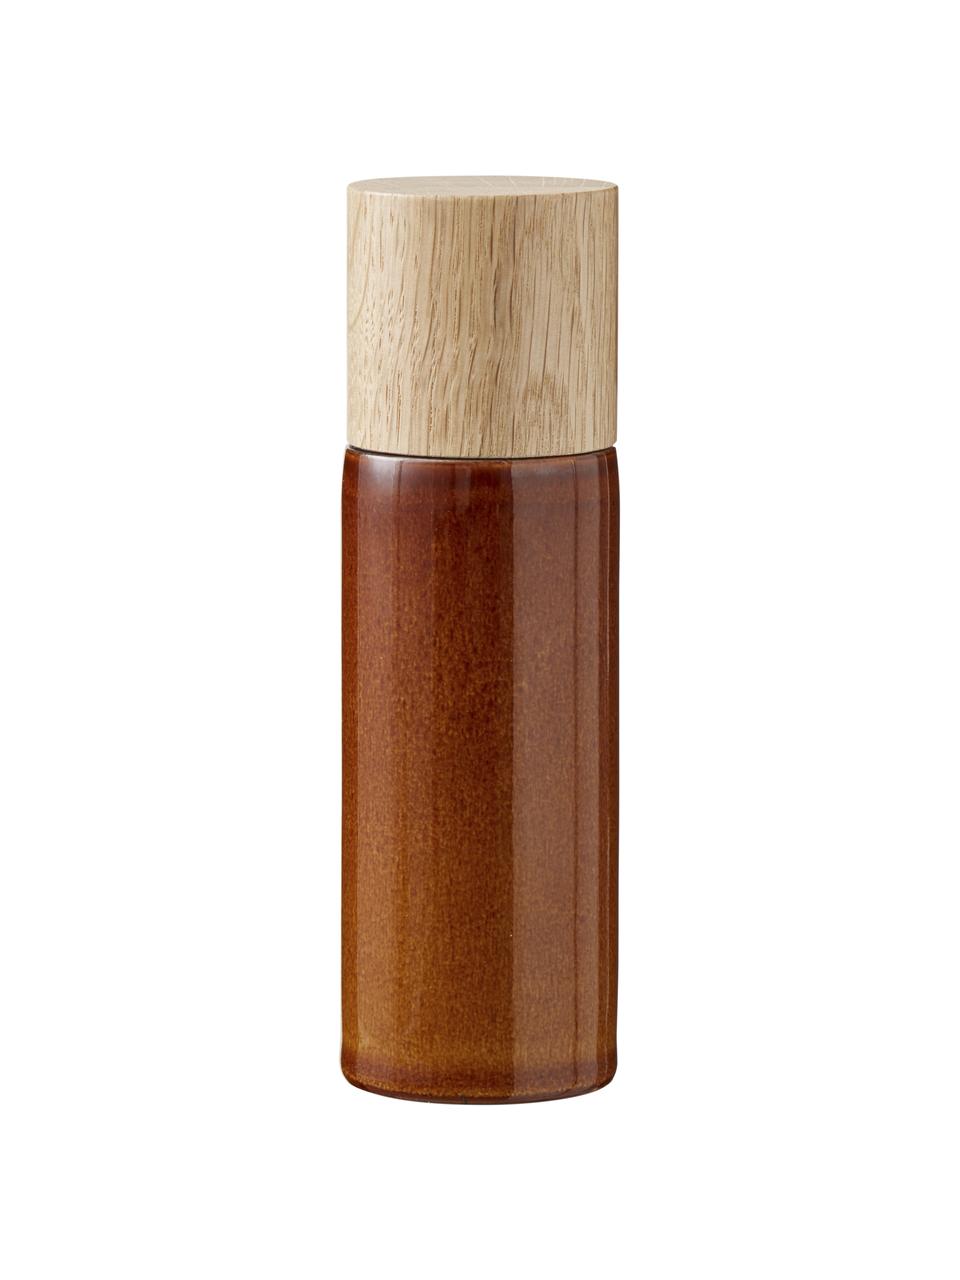 Keramiek zout- en pepermolen Bizz met houten deksel, 2-delig, Deksel: eikenhout, Amberbruin, bruin, Ø 5 x H 17 cm